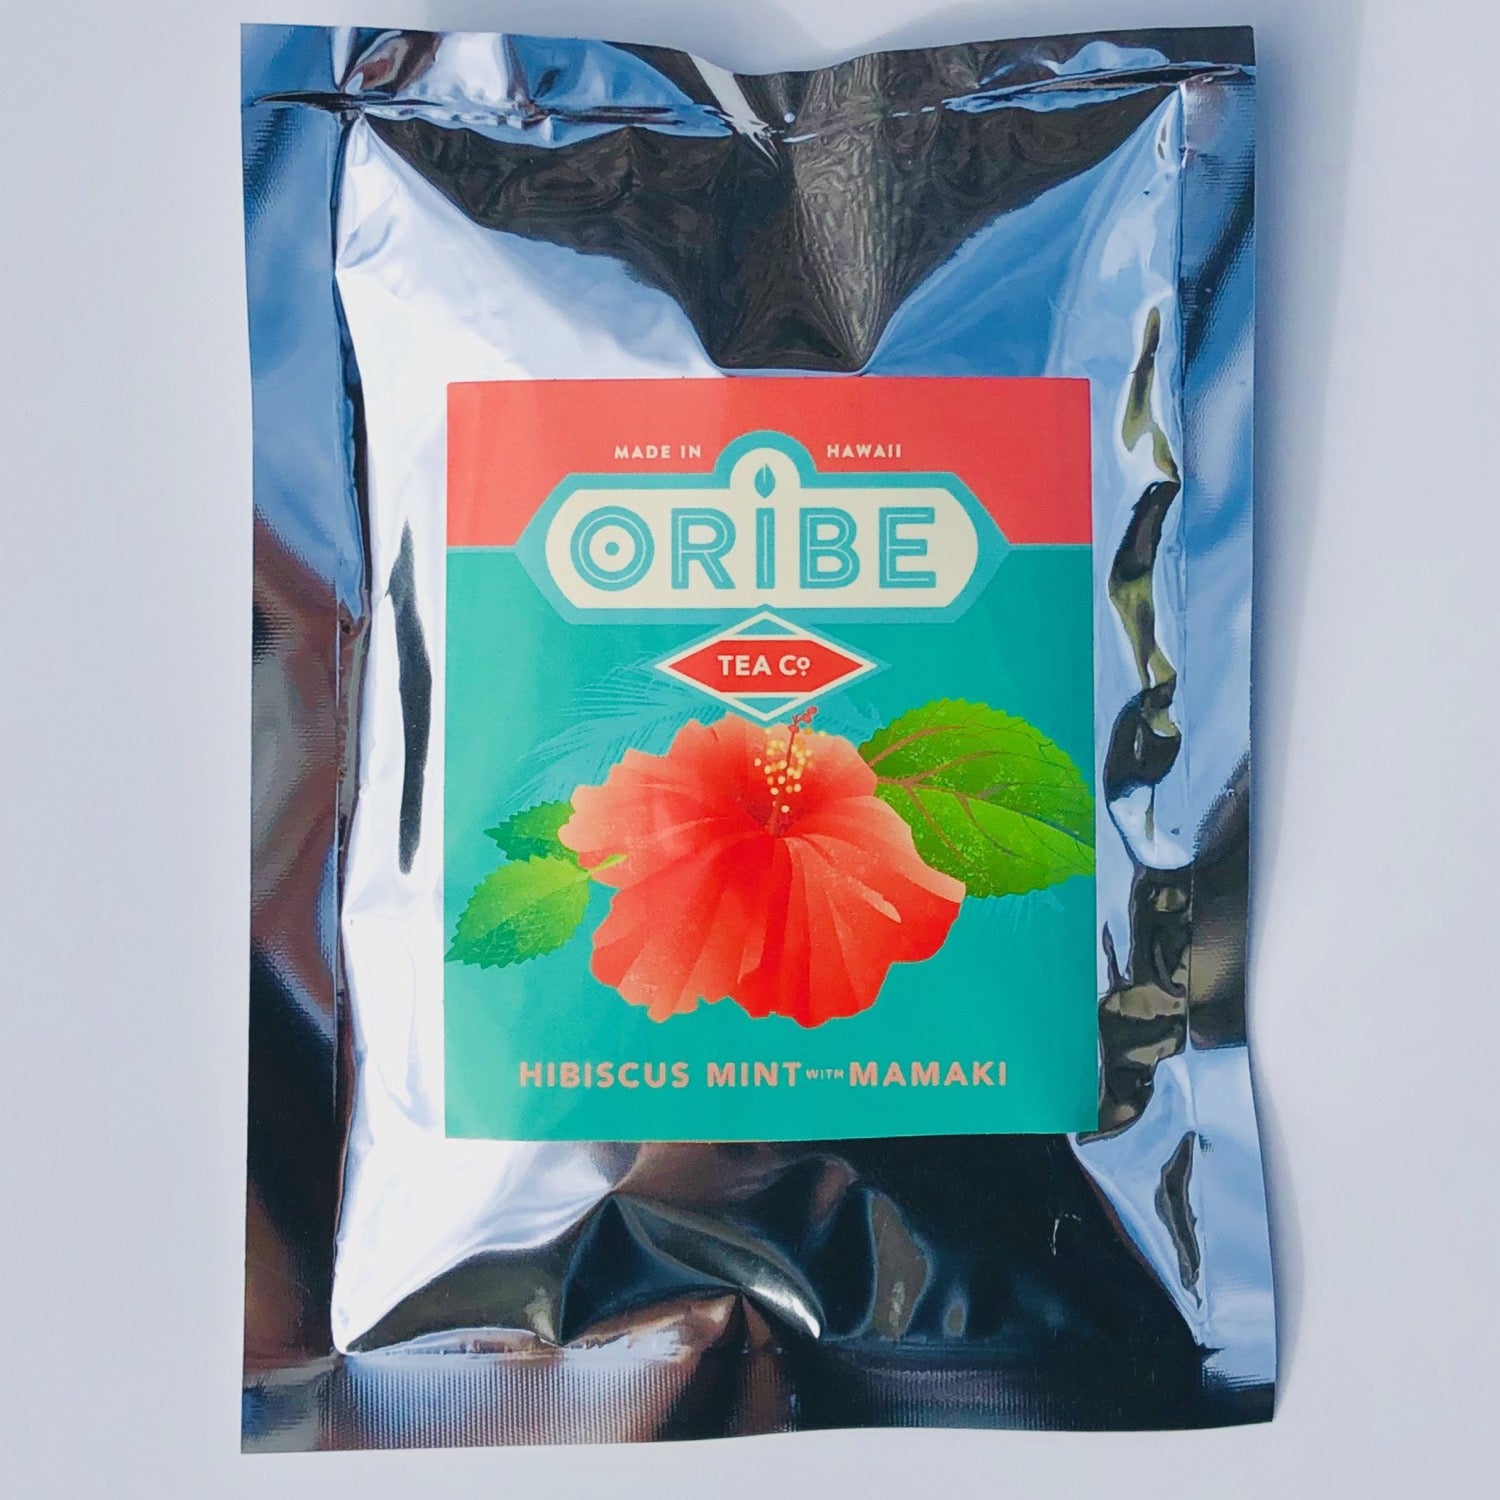 Oribe's Hibiscus Mint Mamaki Cold Brew Iced Tea 